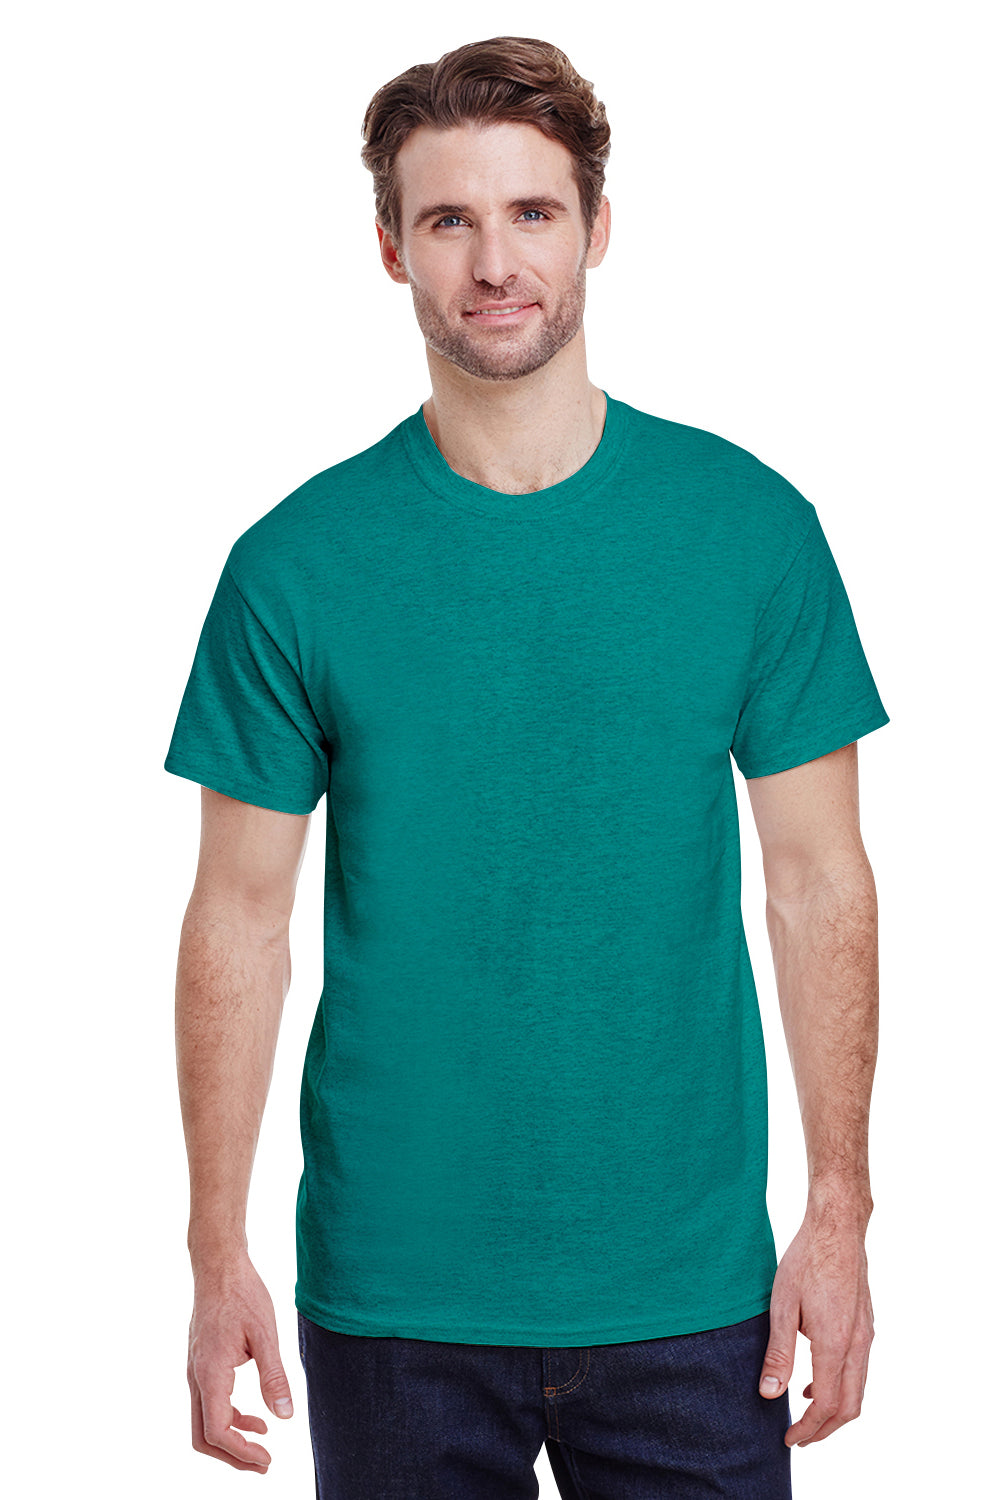 Gildan G500 Mens Short Sleeve Crewneck T-Shirt Antique Jade Green Front